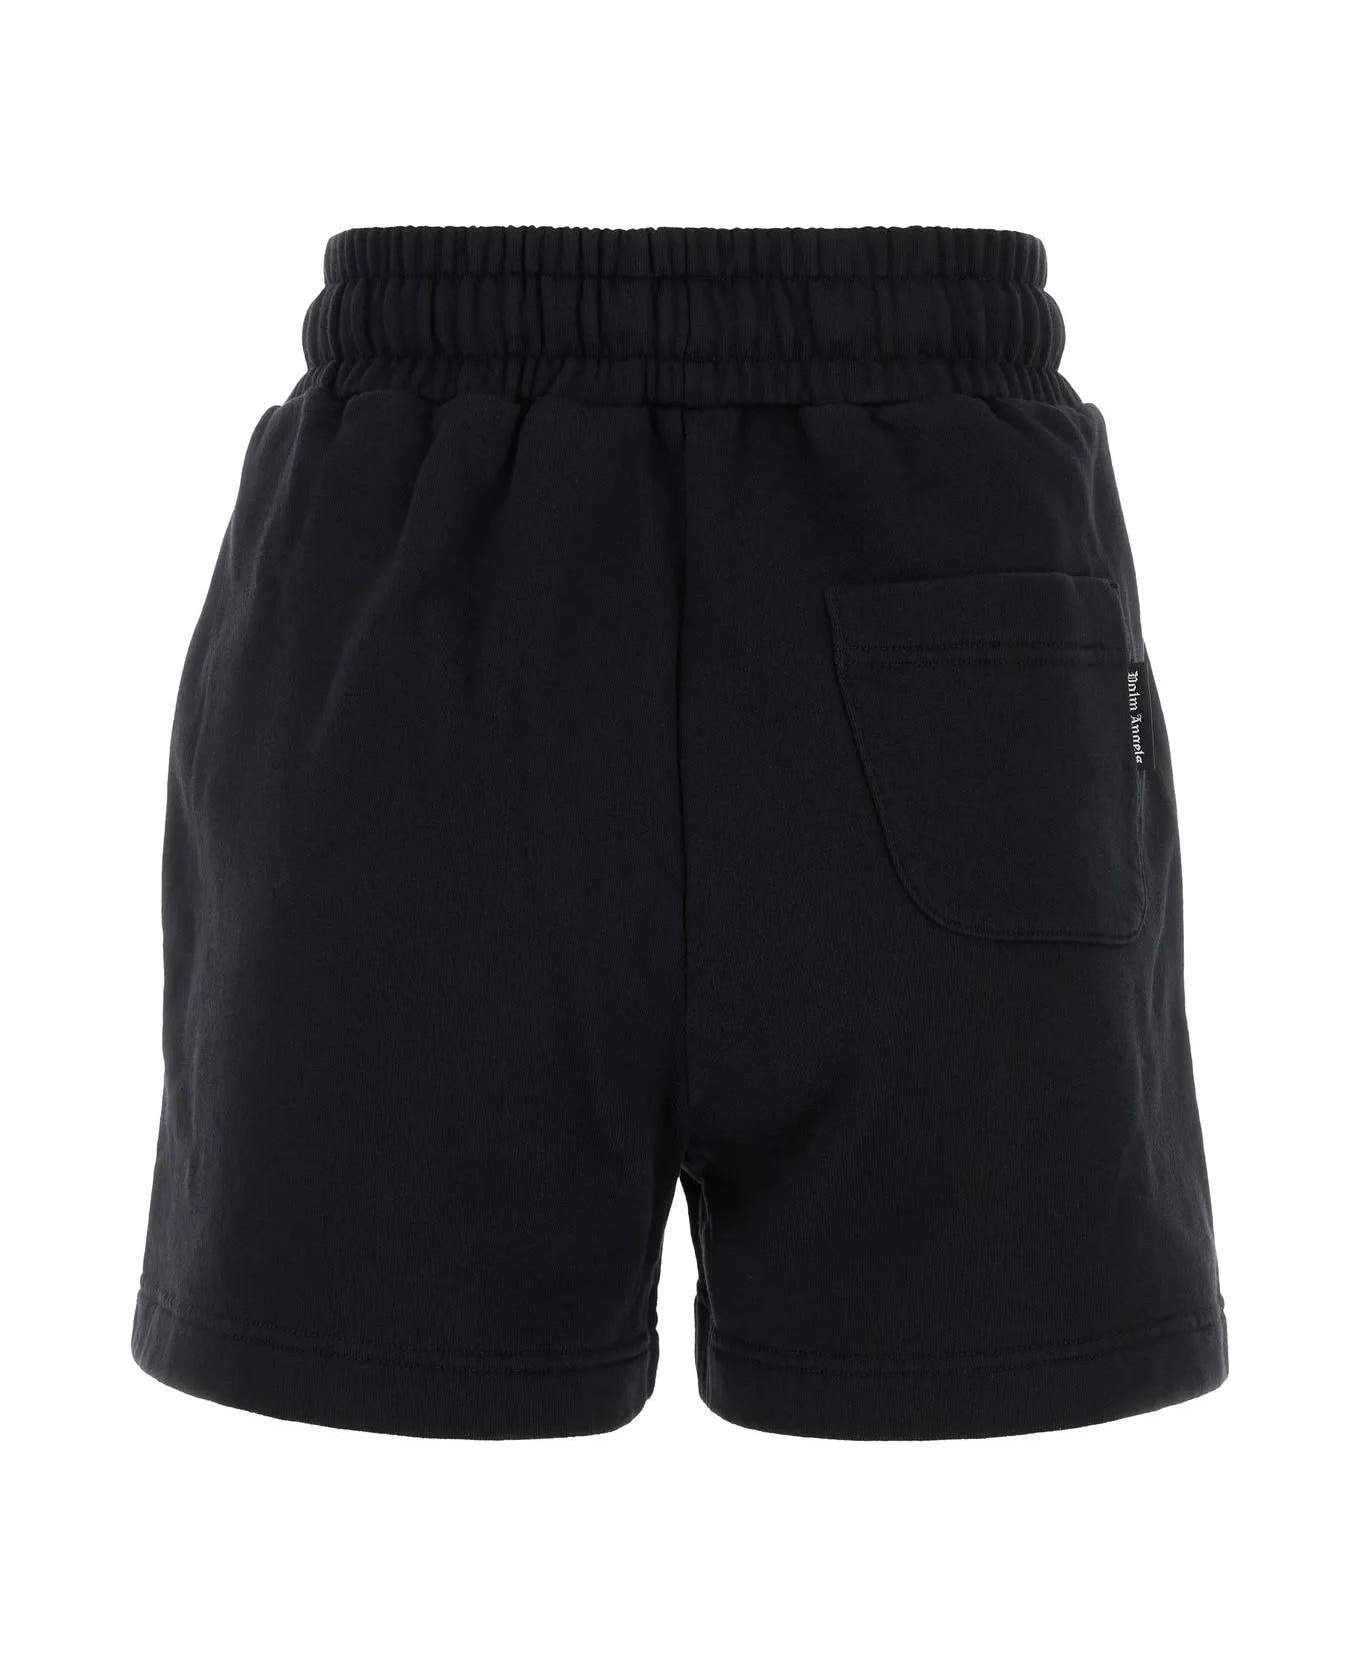 Palm Angels Black Cotton Shorts - Black Black ショートパンツ